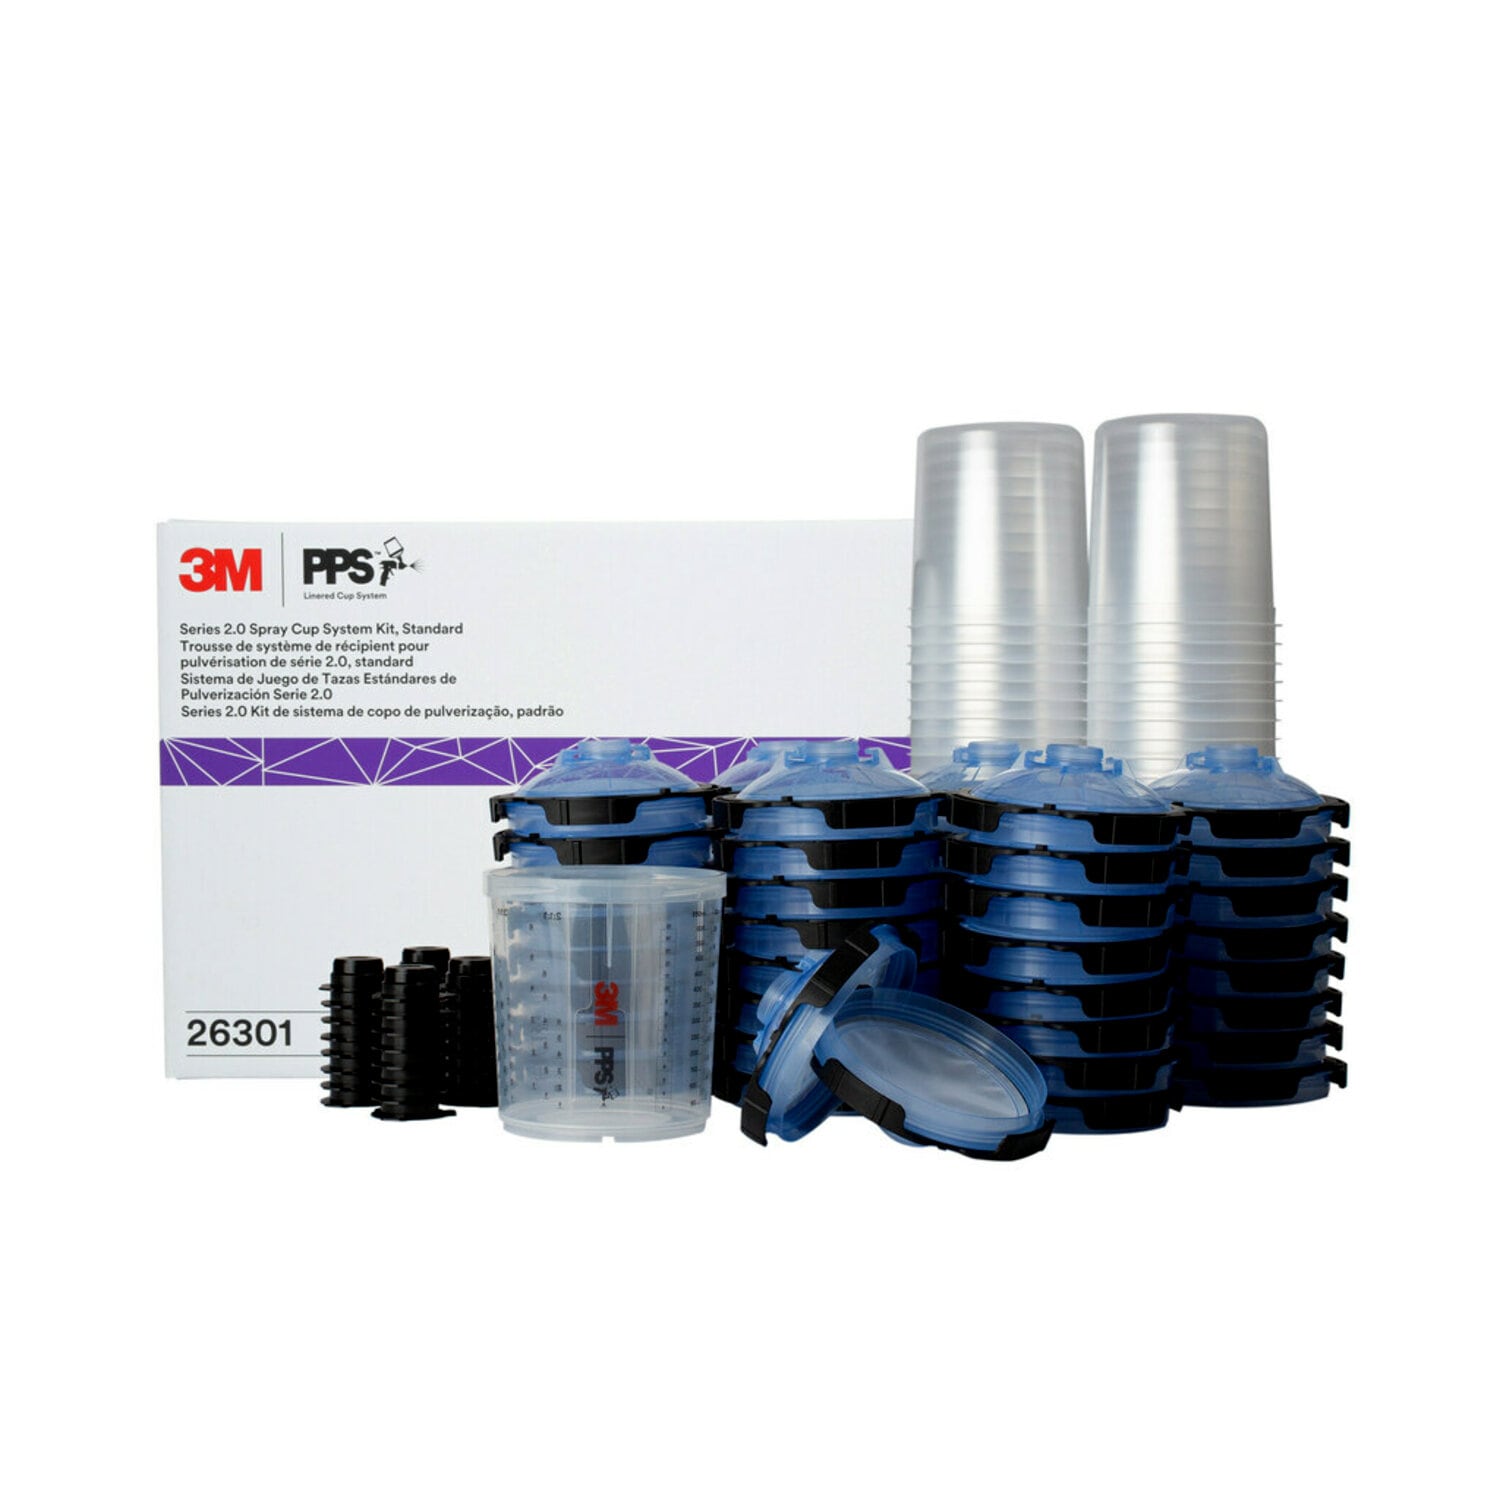 7100134645 - 3M PPS Series 2.0 Spray Cup System Kit 26301, Standard (22 fl oz, 650
mL), 125 Micron Filter, 1 Kit/Case